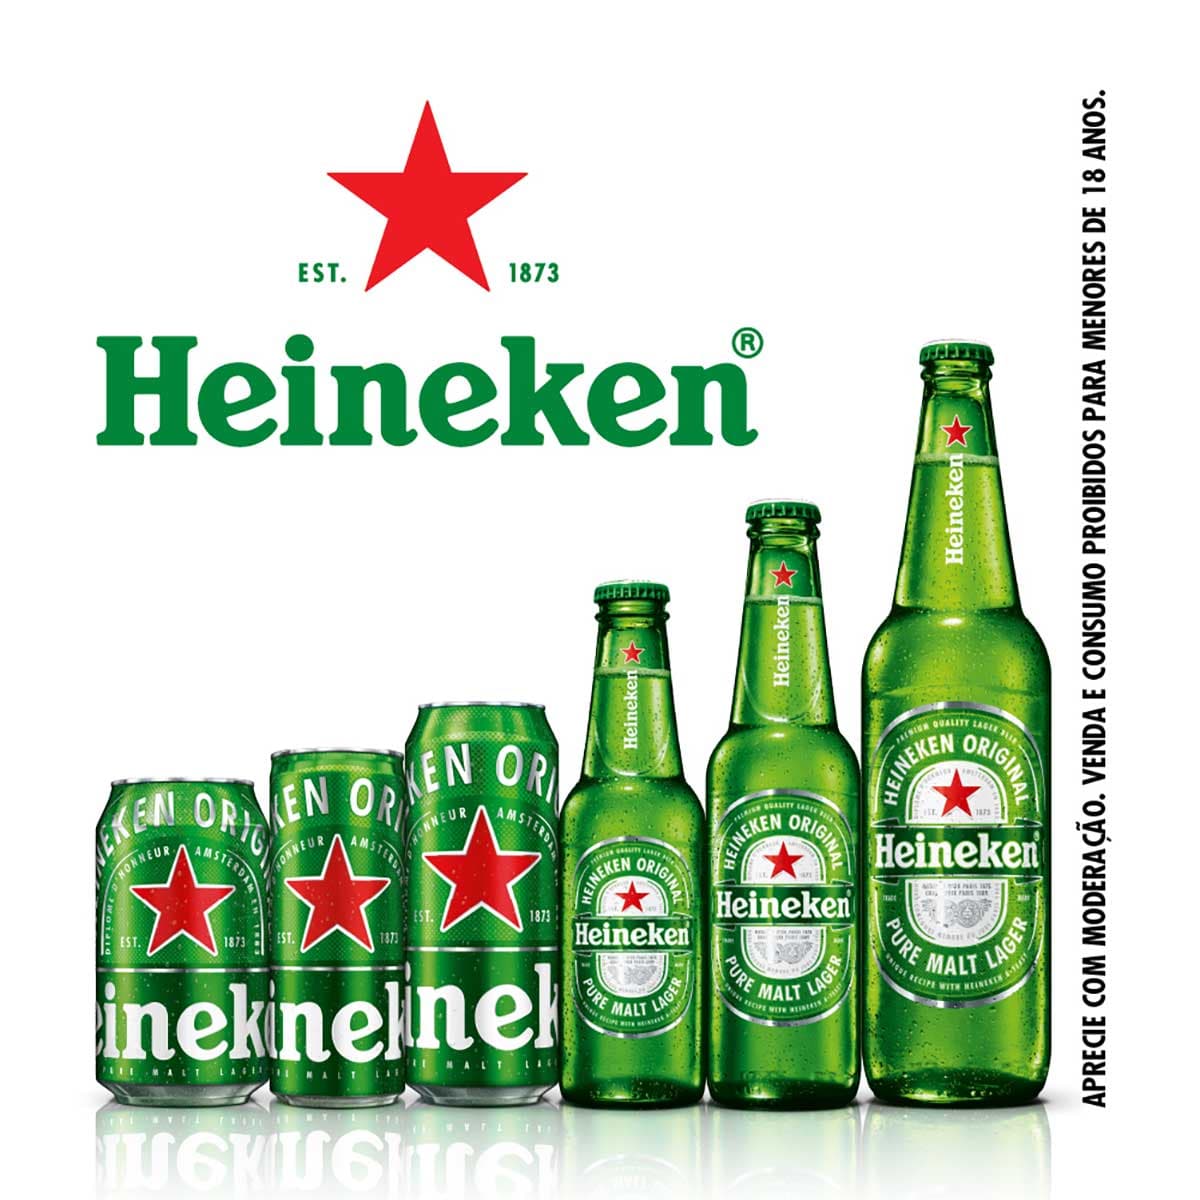 Cerveja Heineken Premium Puro Malte Lager - Pilsen 6 Garrafas Long Neck  330ml, Shopping